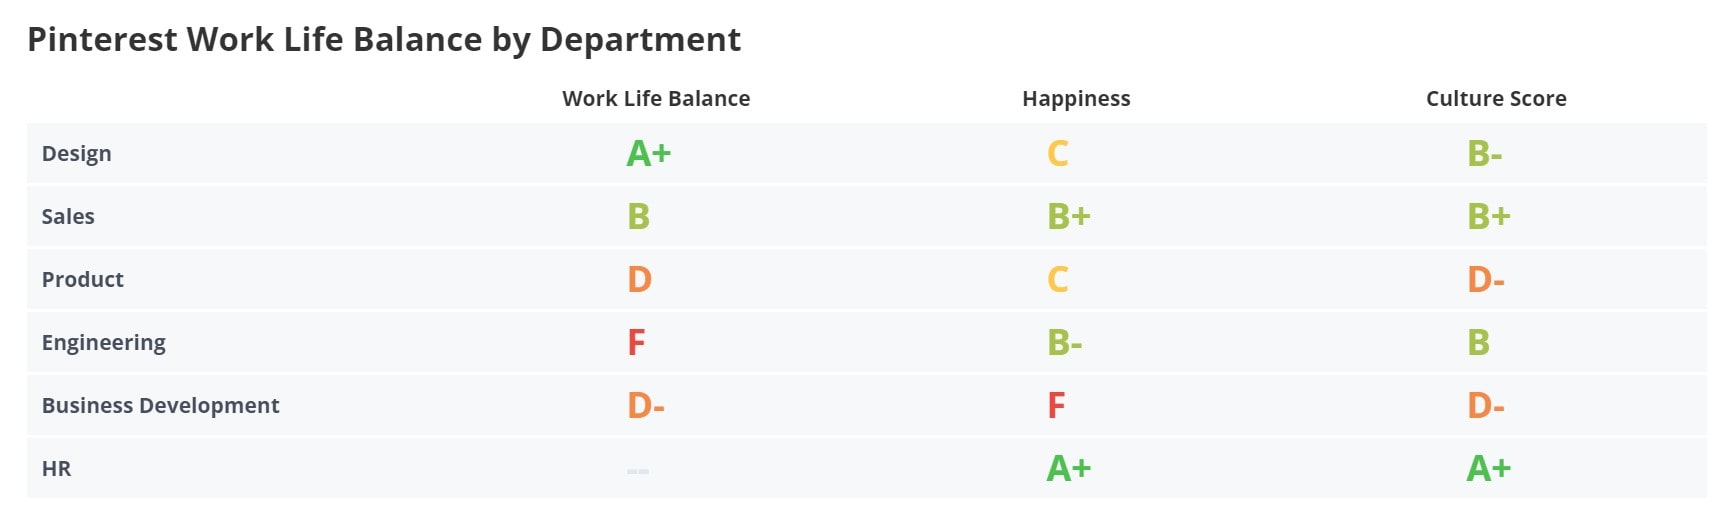 Pinterest Work Life Balance per Department